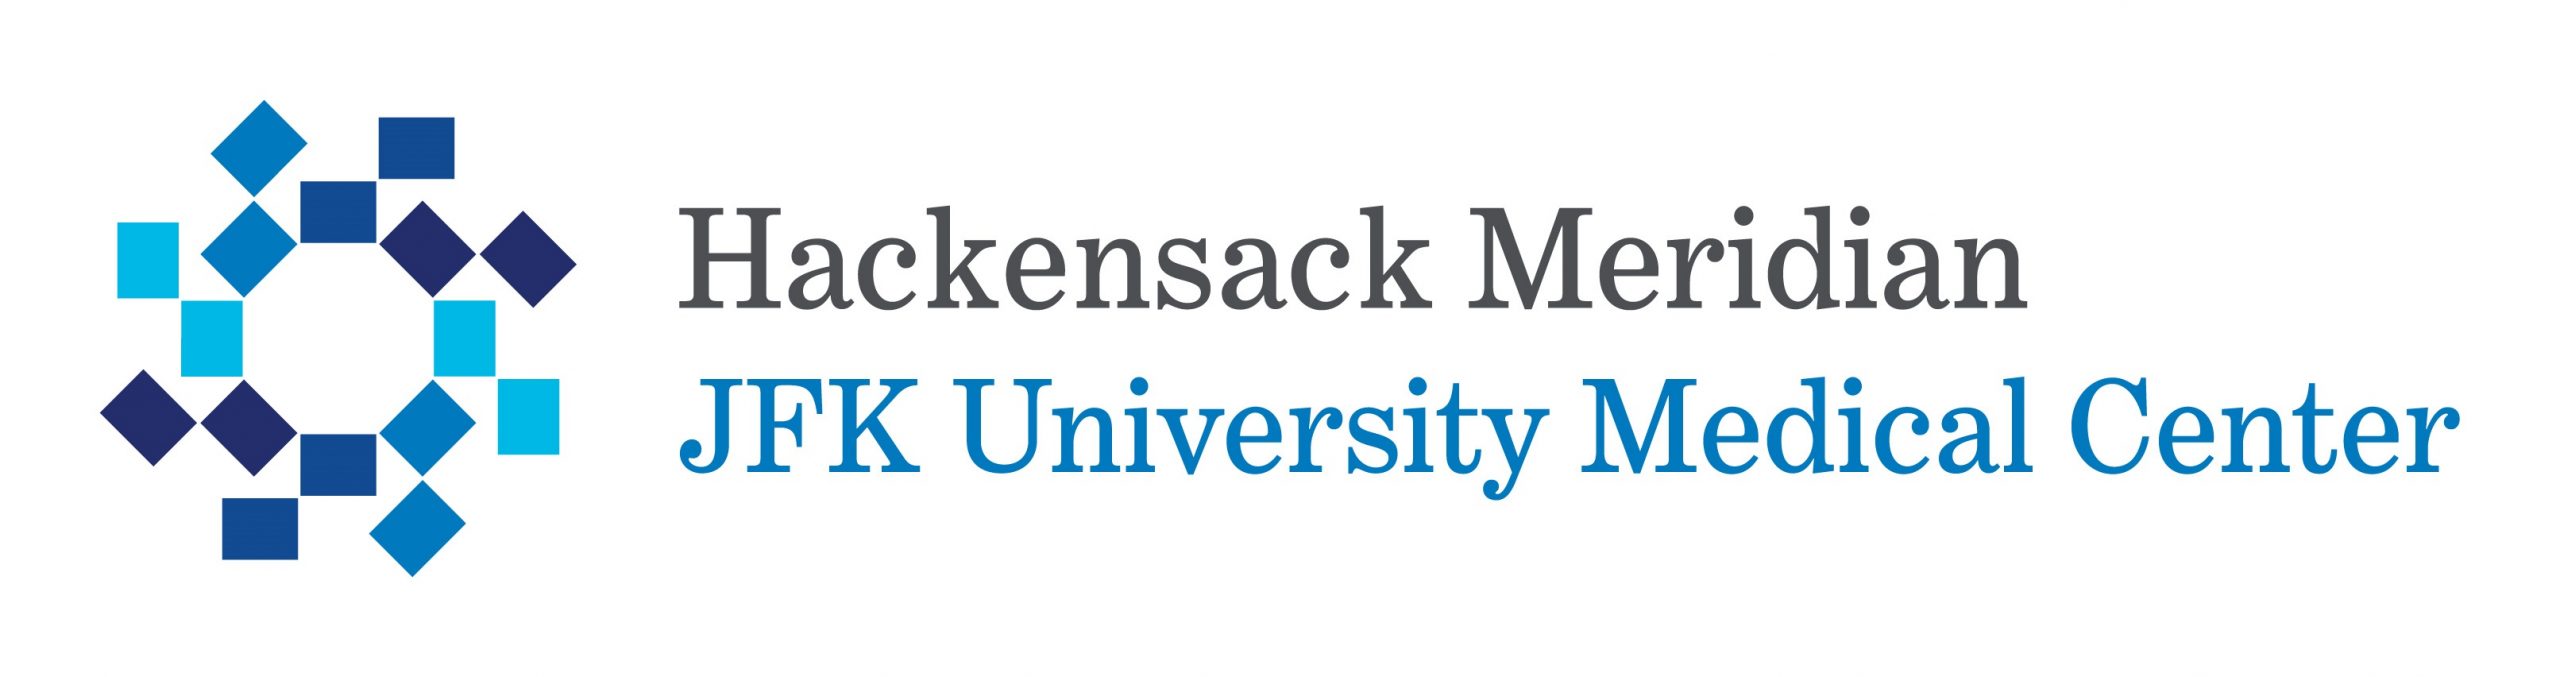 Hackensack Meridian JFK University Medical Center